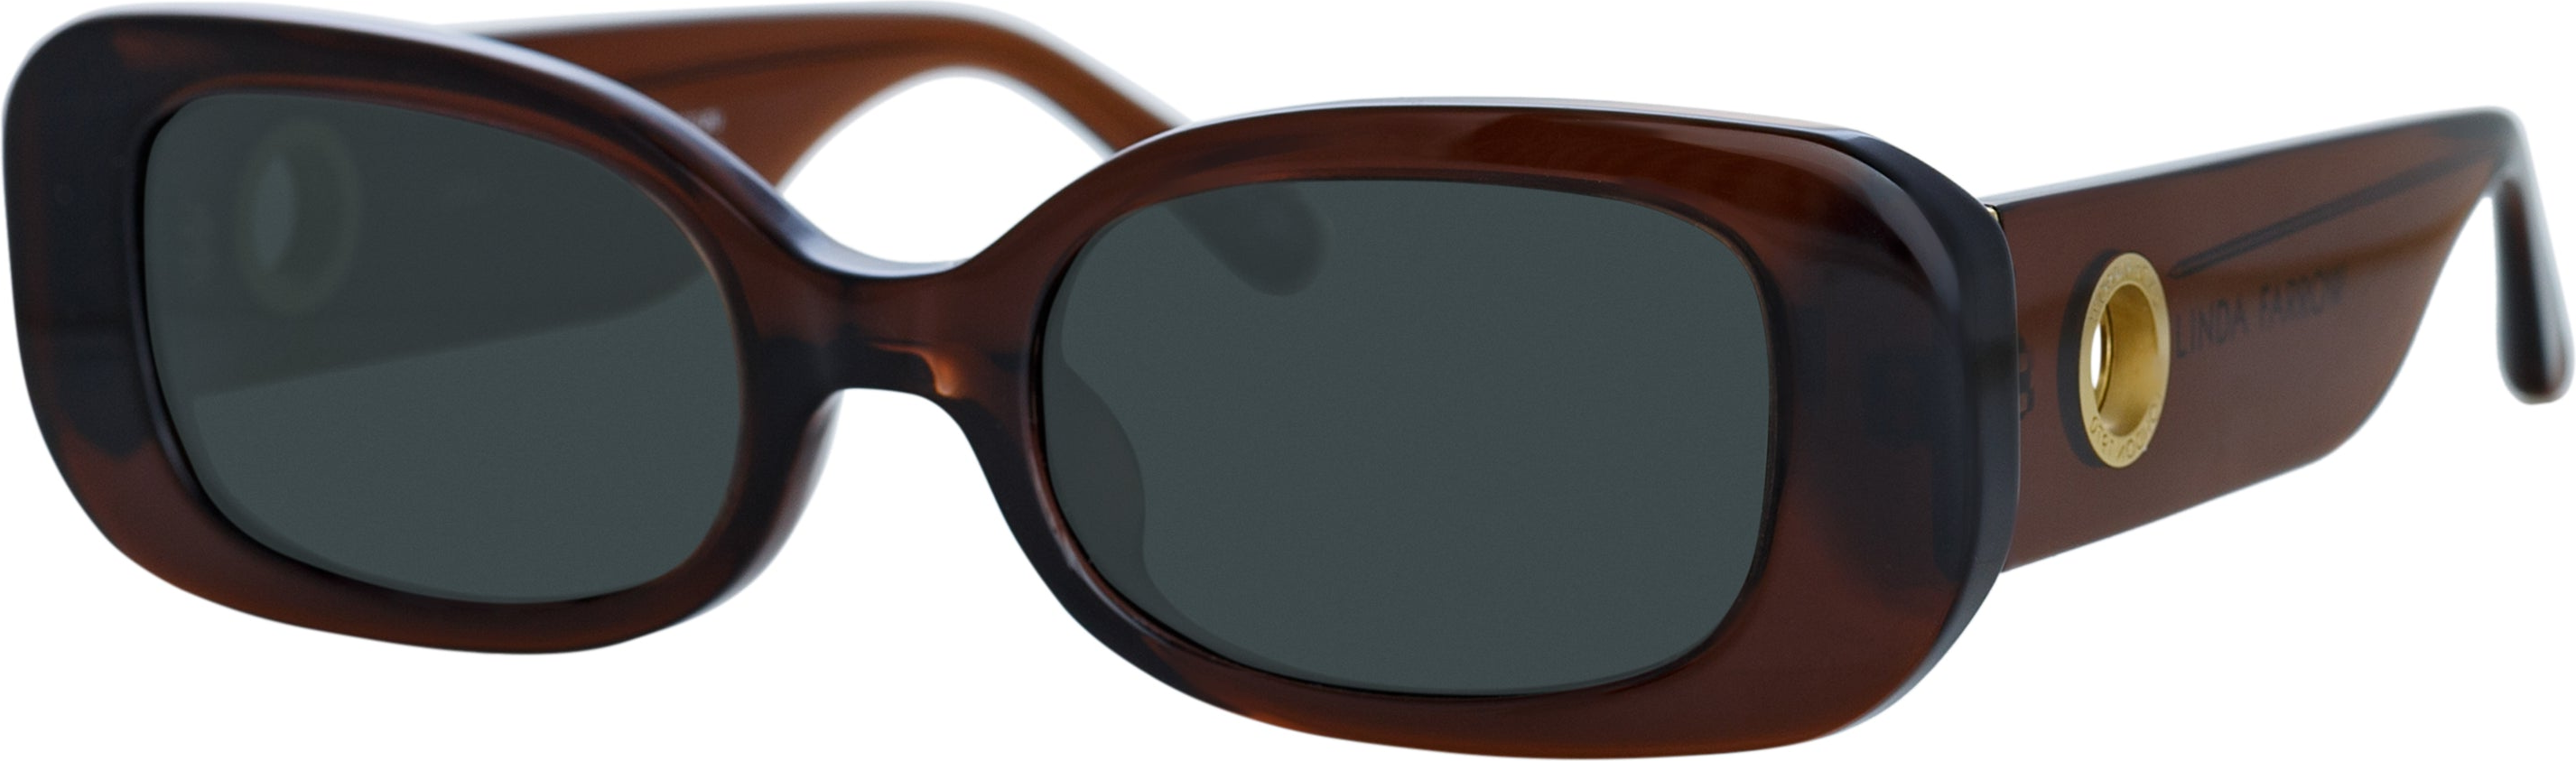 Color_LFL1117C8SUN - Lola Rectangular Sunglasses in Brown